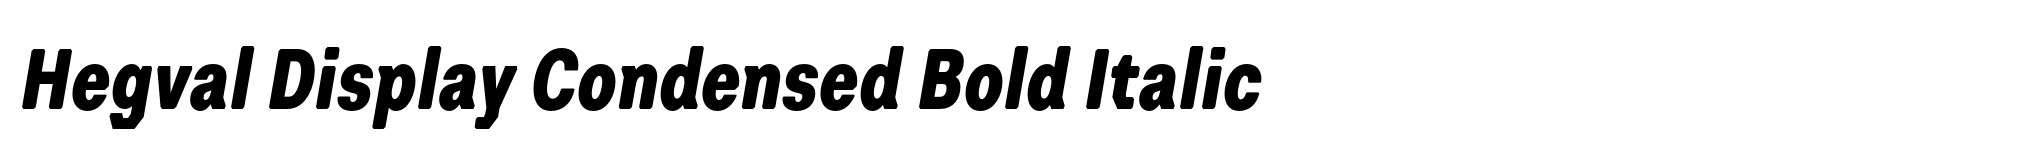 Hegval Display Condensed Bold Italic image